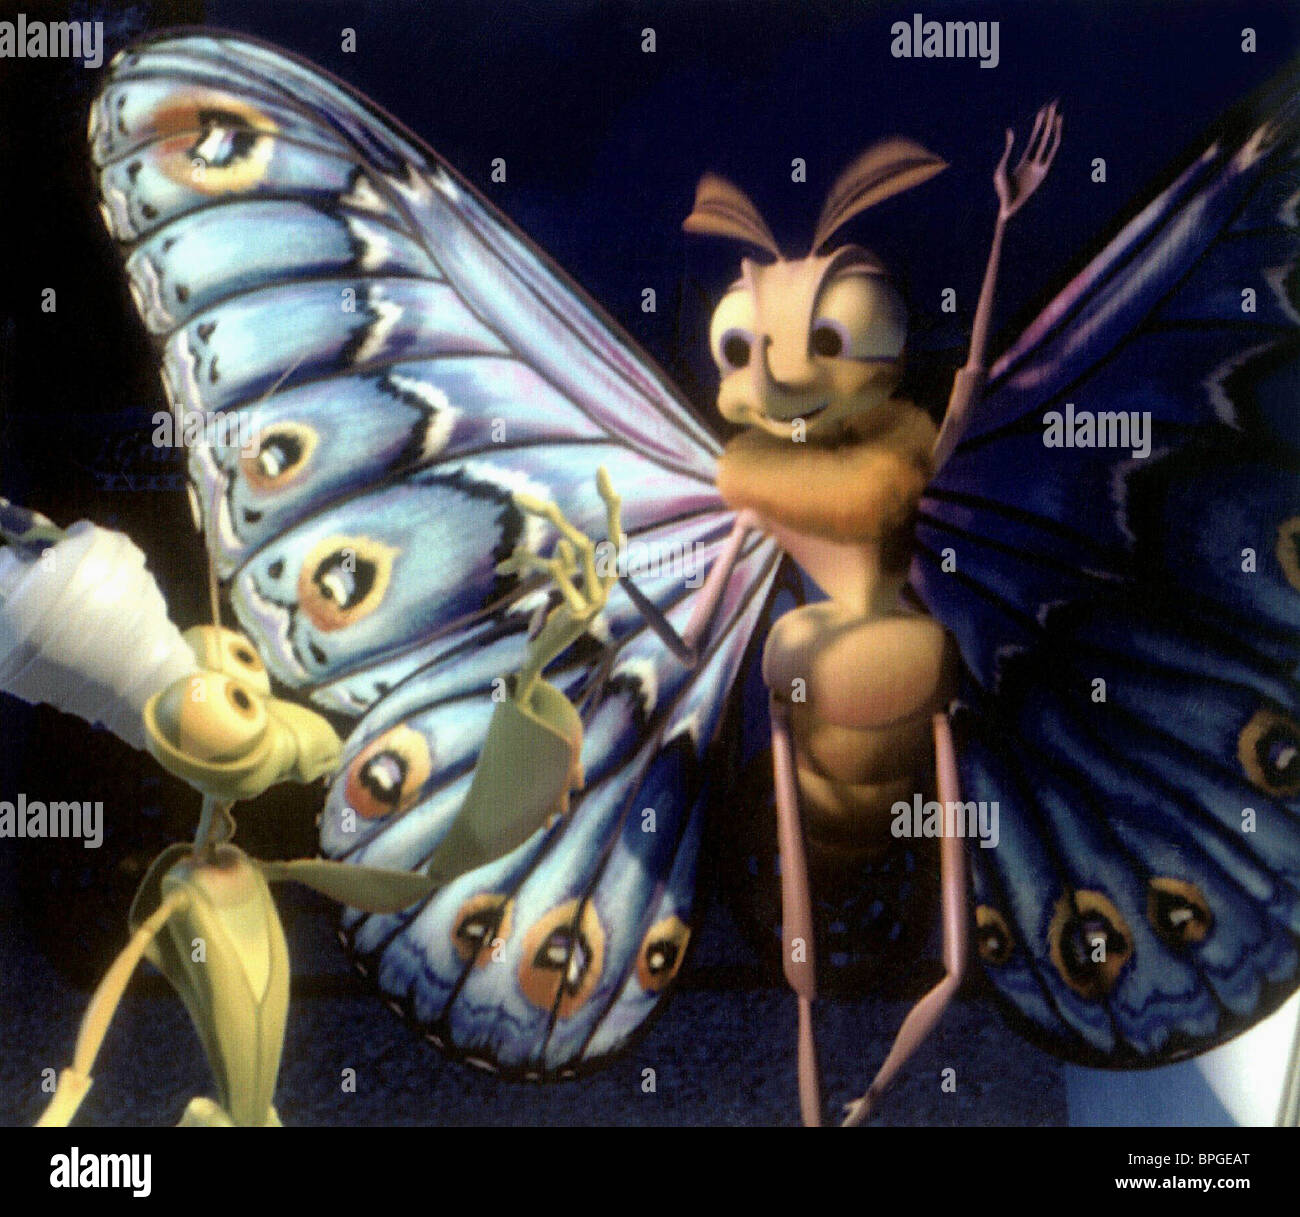 MANNY & GYPSY A BUG'S LIFE (1998 Stock Photo, Royalty Free Image